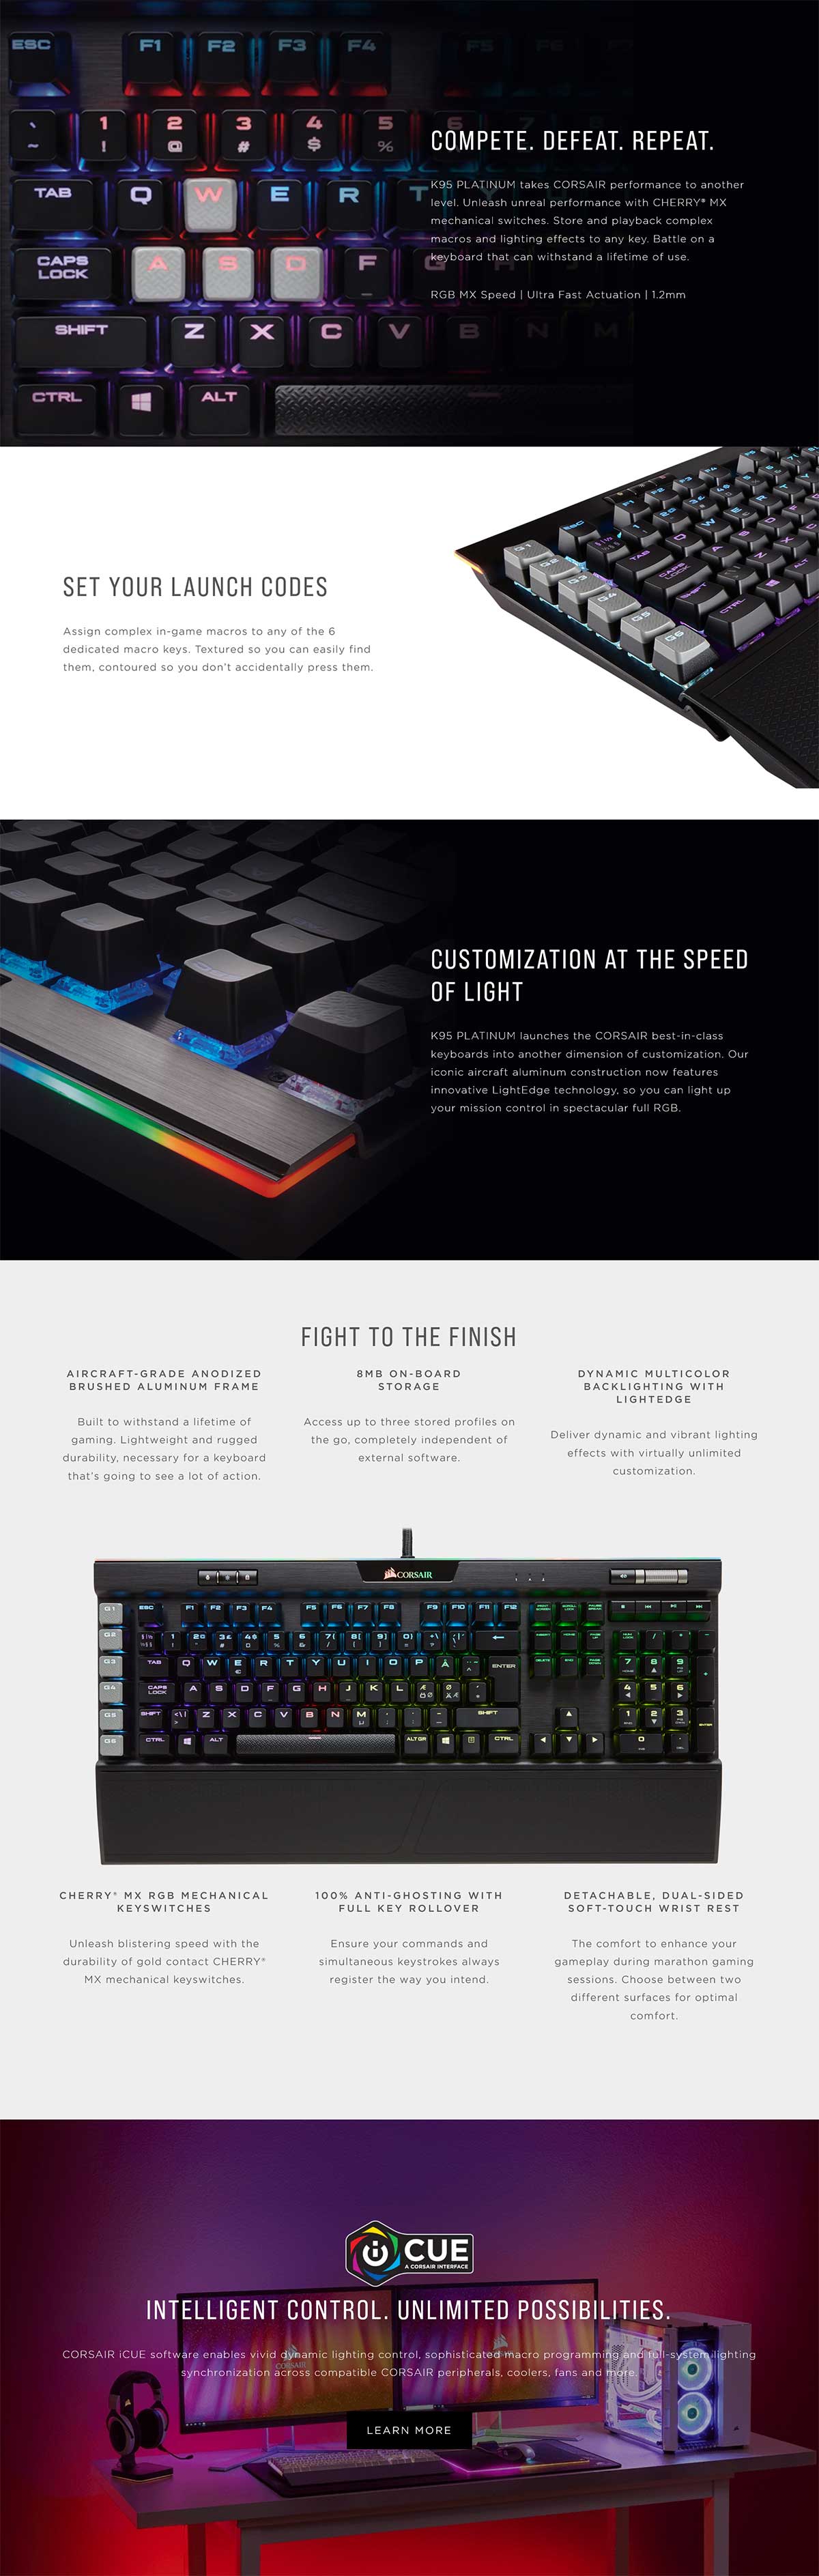 Corsair K95 RGB PLATINUM Mechanical Gaming Keyboard CH-9127012-NA Details